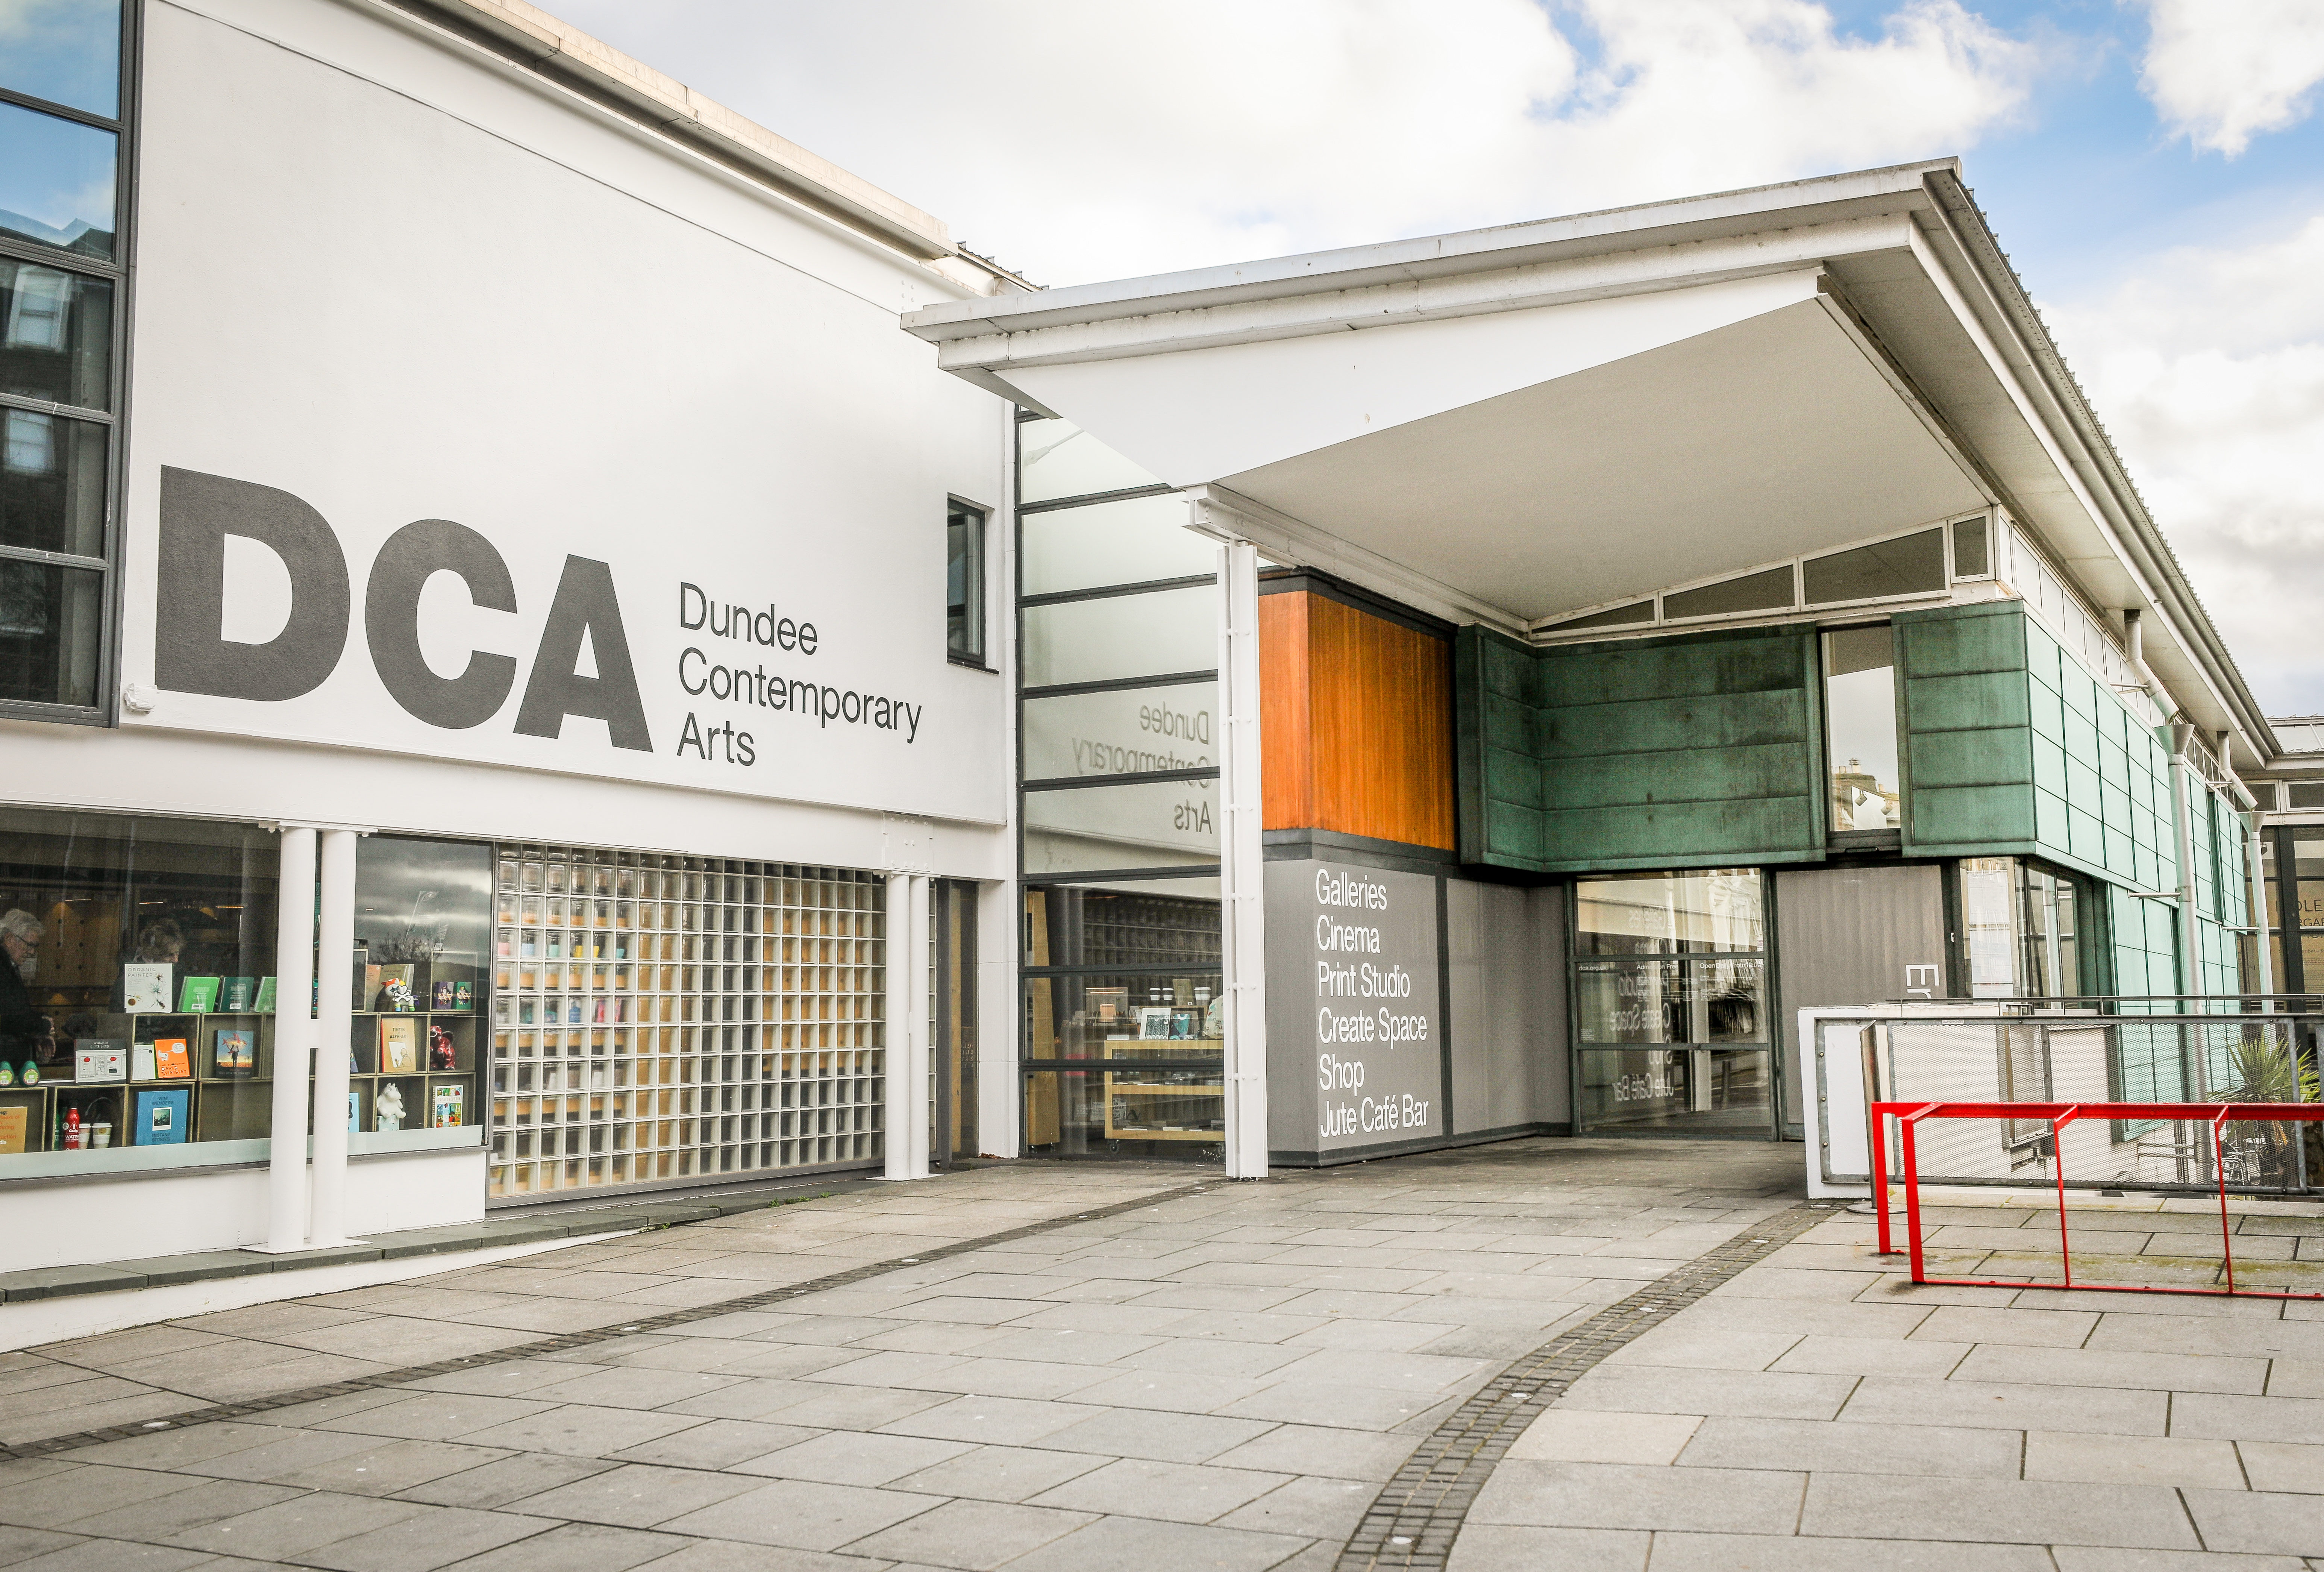 DCA opened in 1999